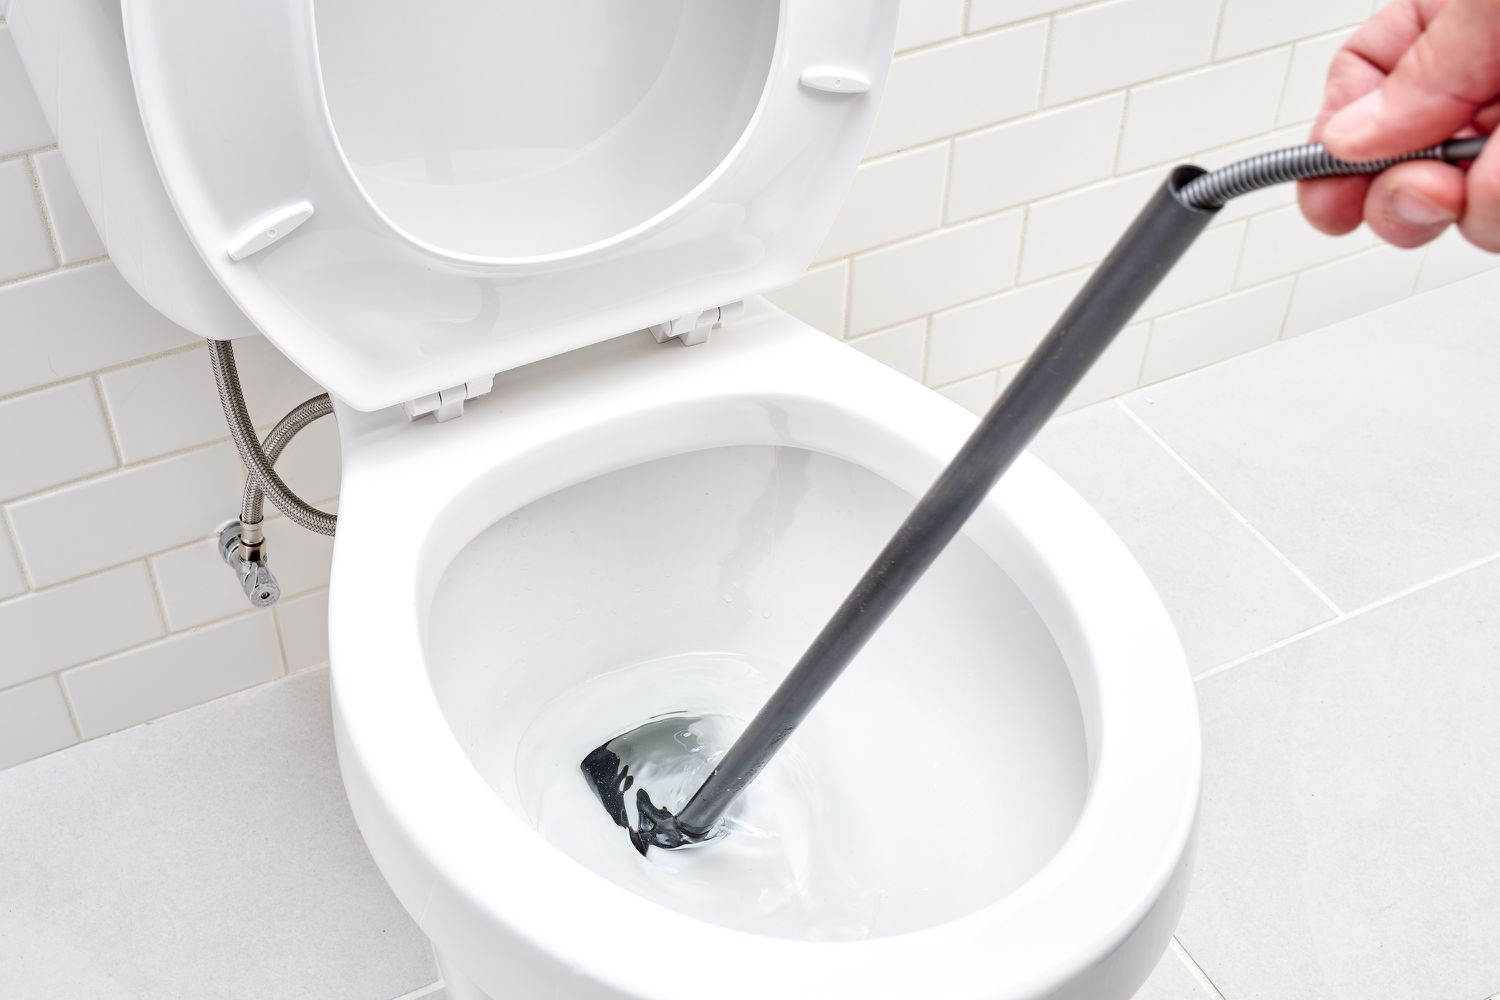 Toilet auger reaching inside toilet bowl